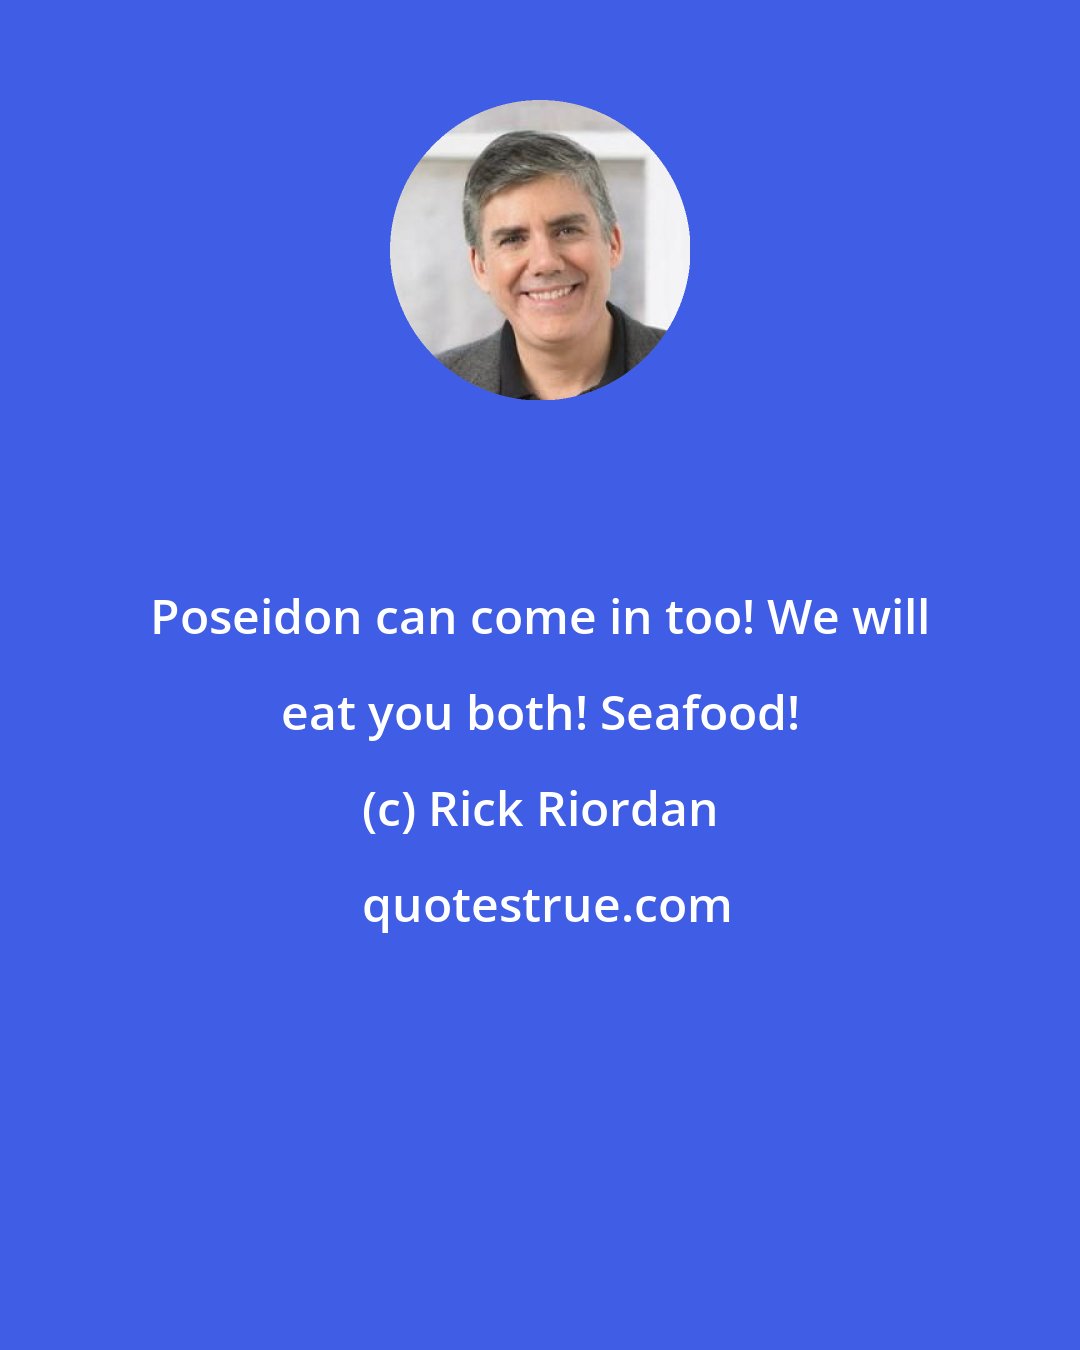 Rick Riordan: Poseidon can come in too! We will eat you both! Seafood!